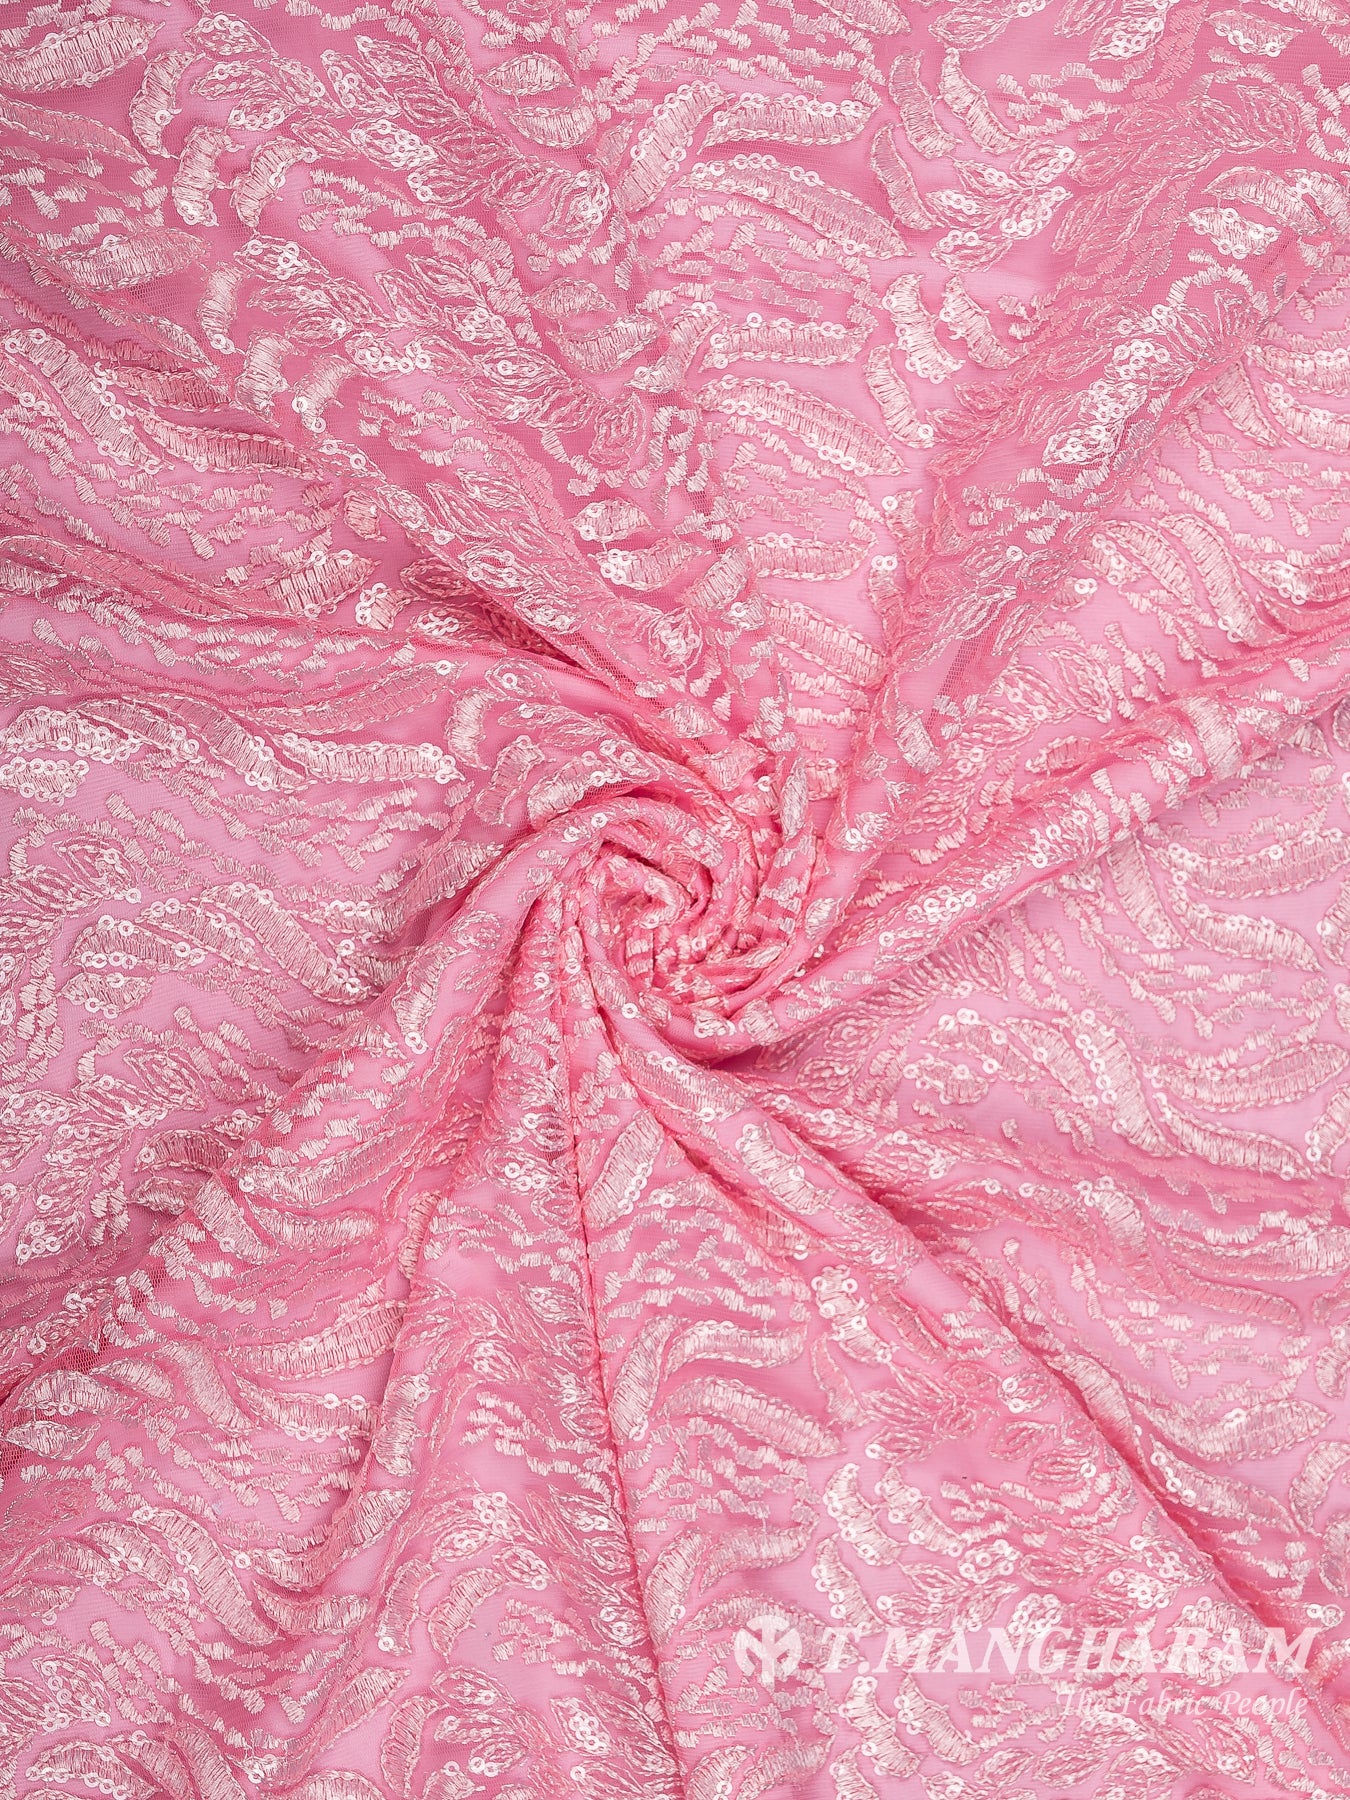 Pink Fancy Net Fabric - EB5799 view-1